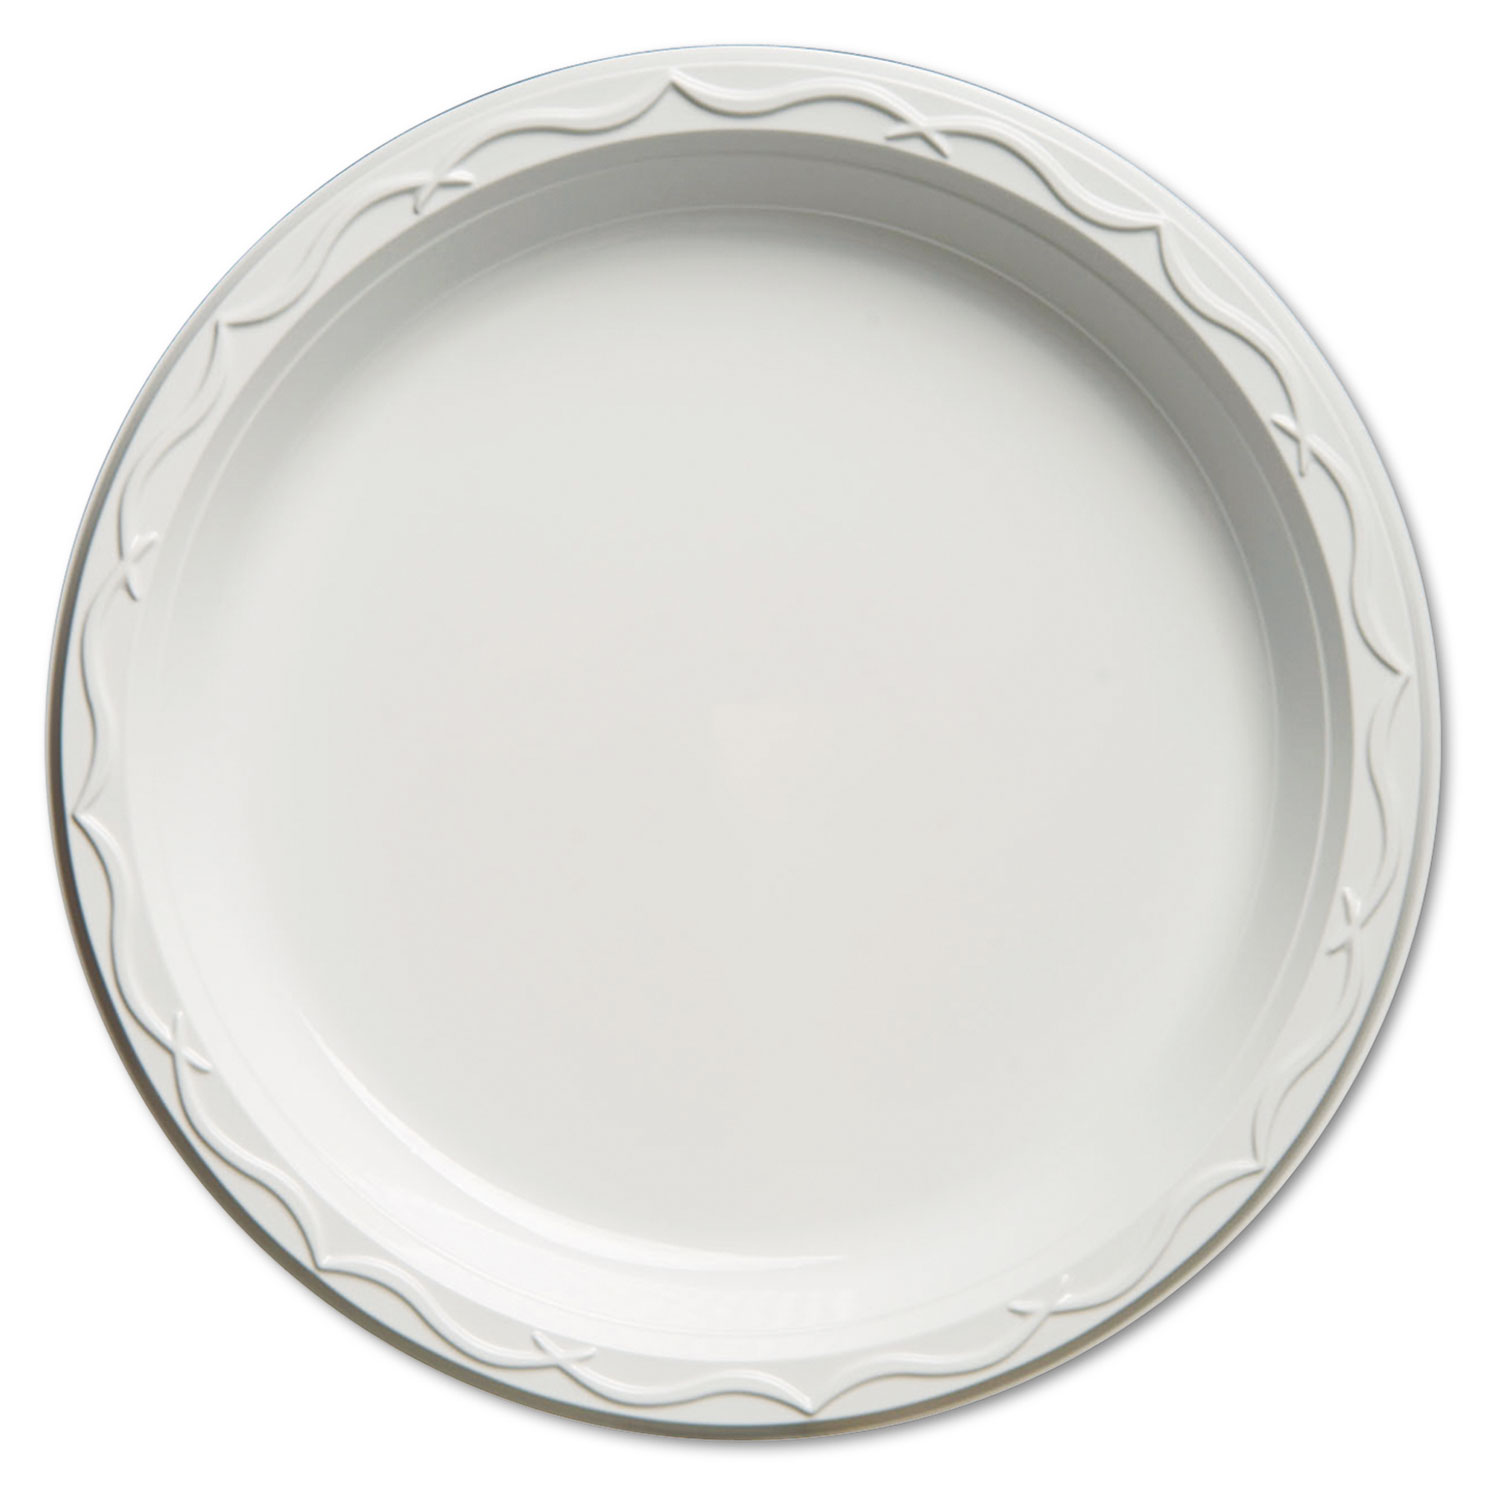  Genpak 71000--- Aristocrat Plastic Plates, 10 1/4 Inches, White, Round, 125/Pack (GNP71000) 